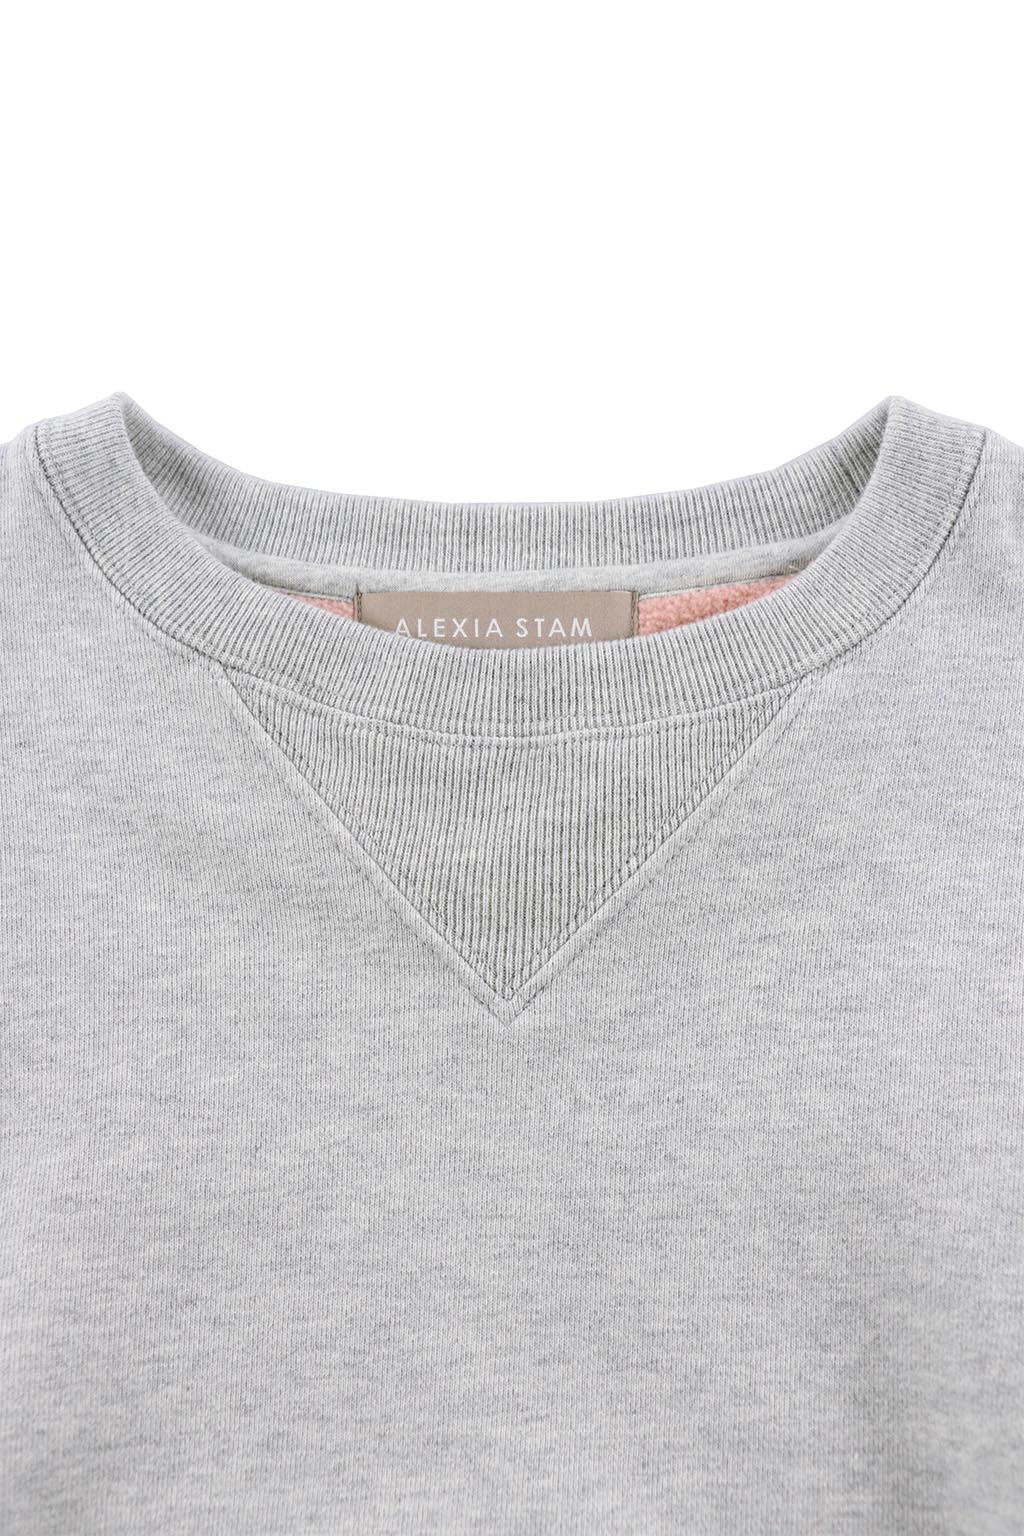 Contrast Stitch Cropped Sweat Shirt - ALEXIA STAM